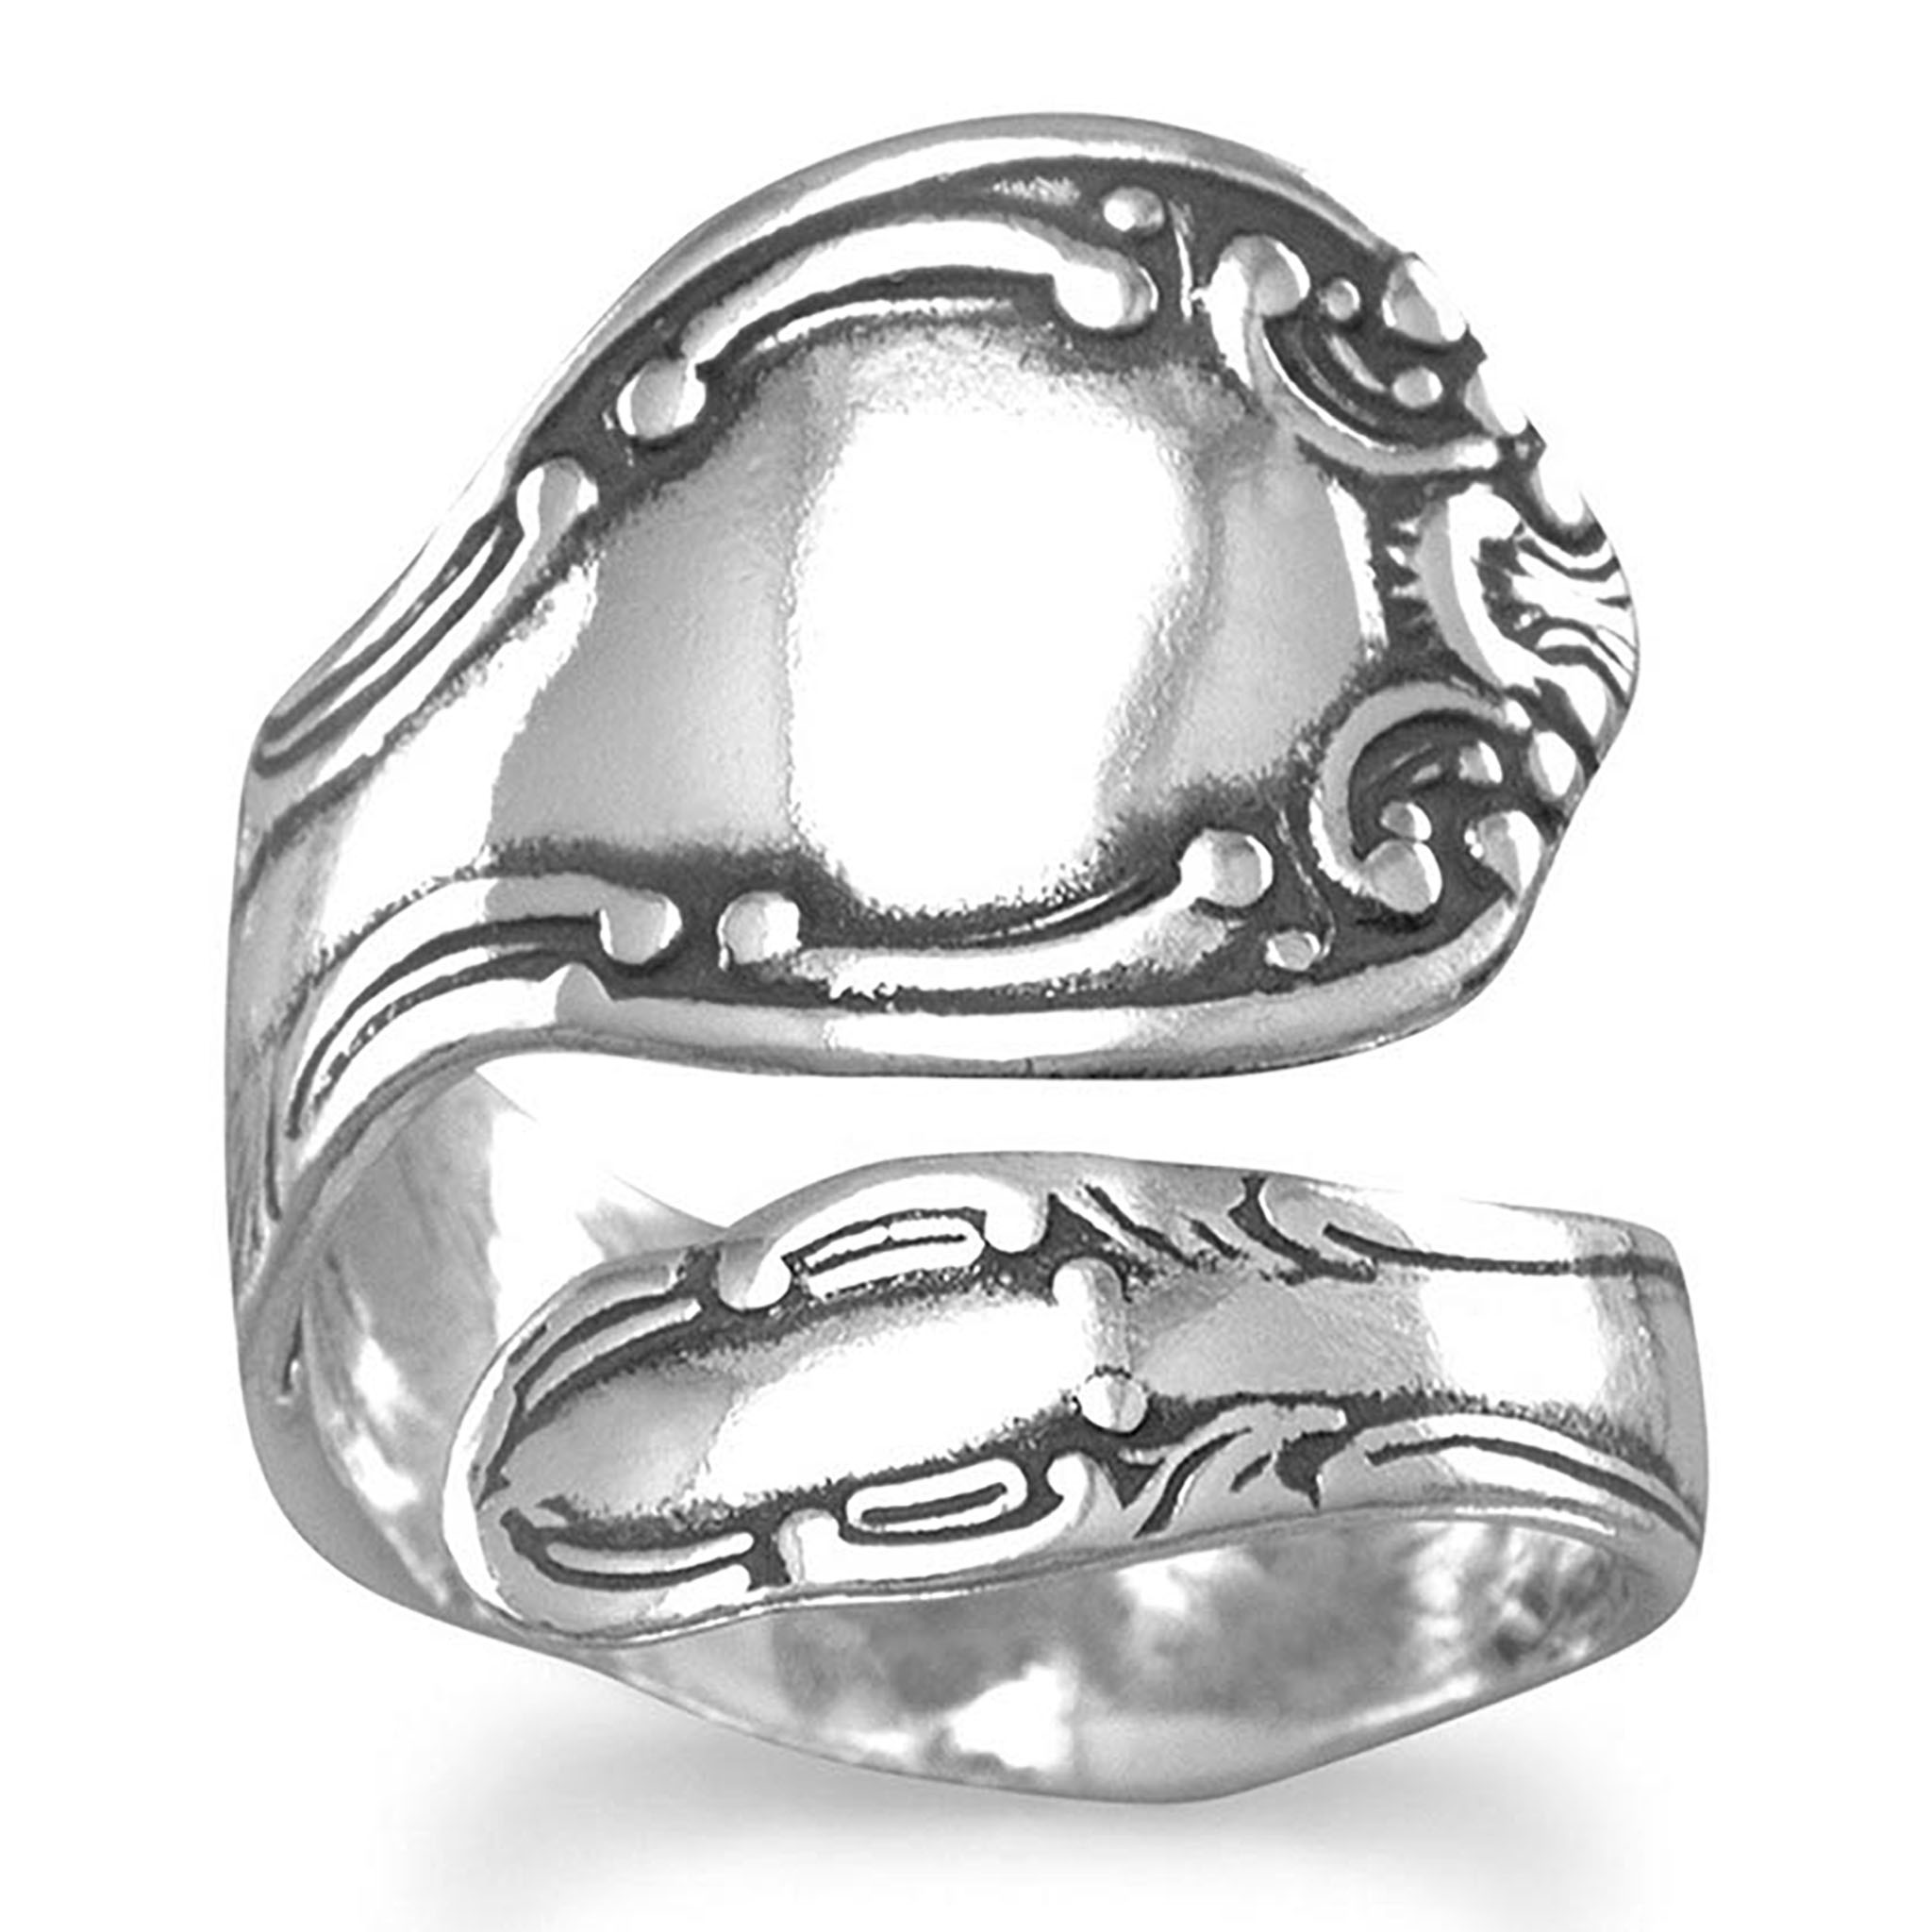 Adjustable Swirl Design Spoon Ring